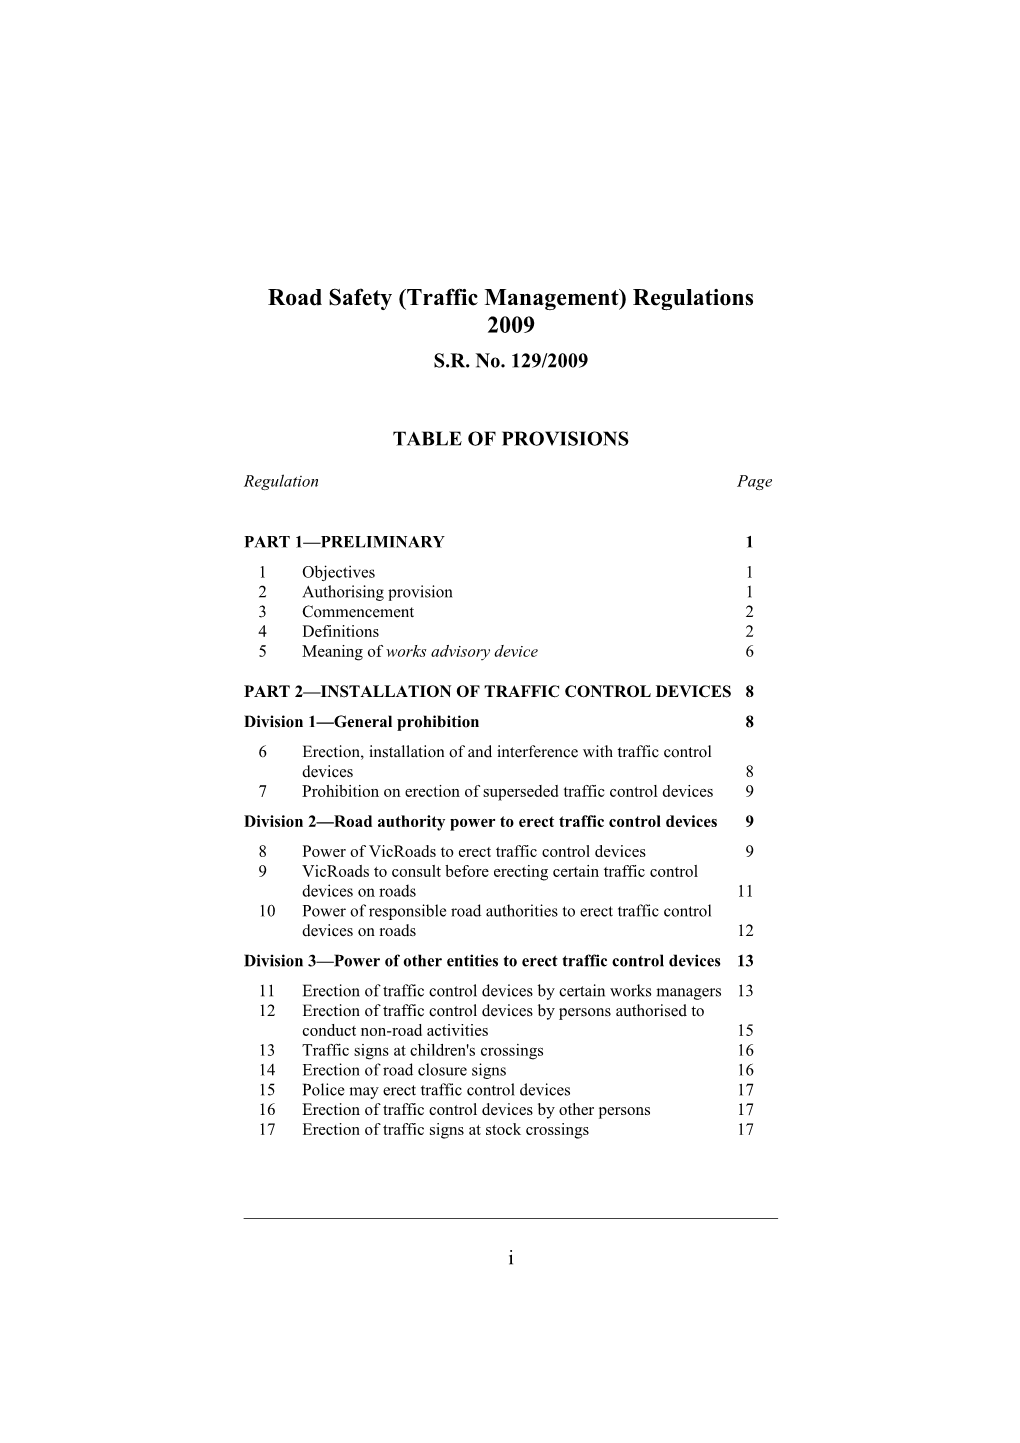 Road Safety (Traffic Management) Regulations 2009